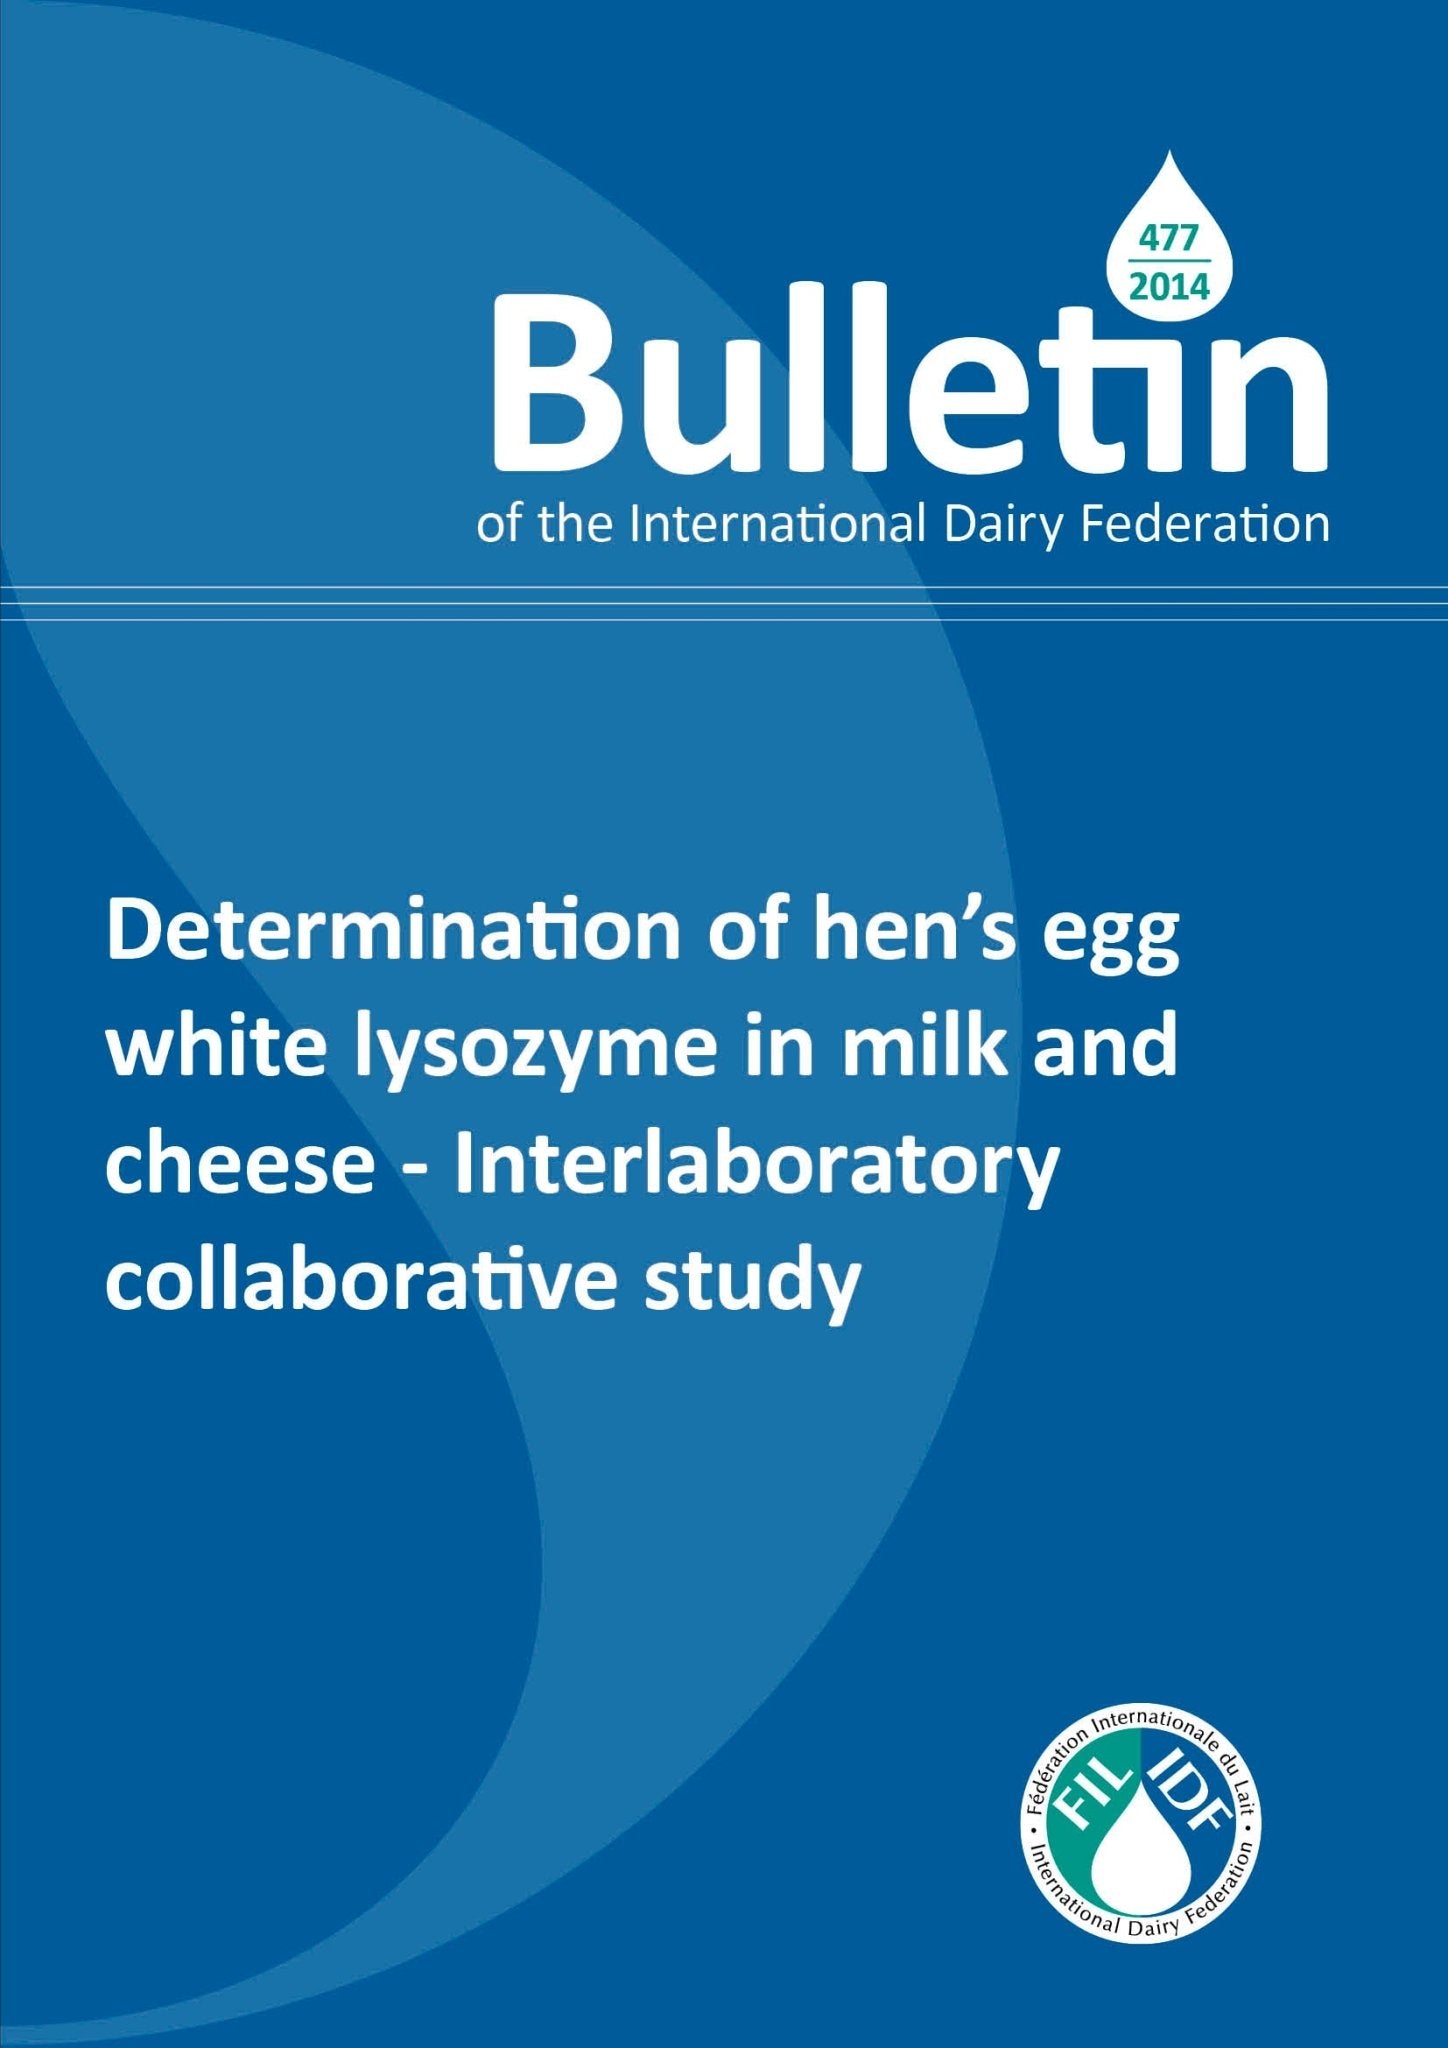 Bulletin of the IDF N° 477/2014: Determination of hen’s egg white lysozyme in milk and cheese - Interlaboratory collaborative study - FIL-IDF